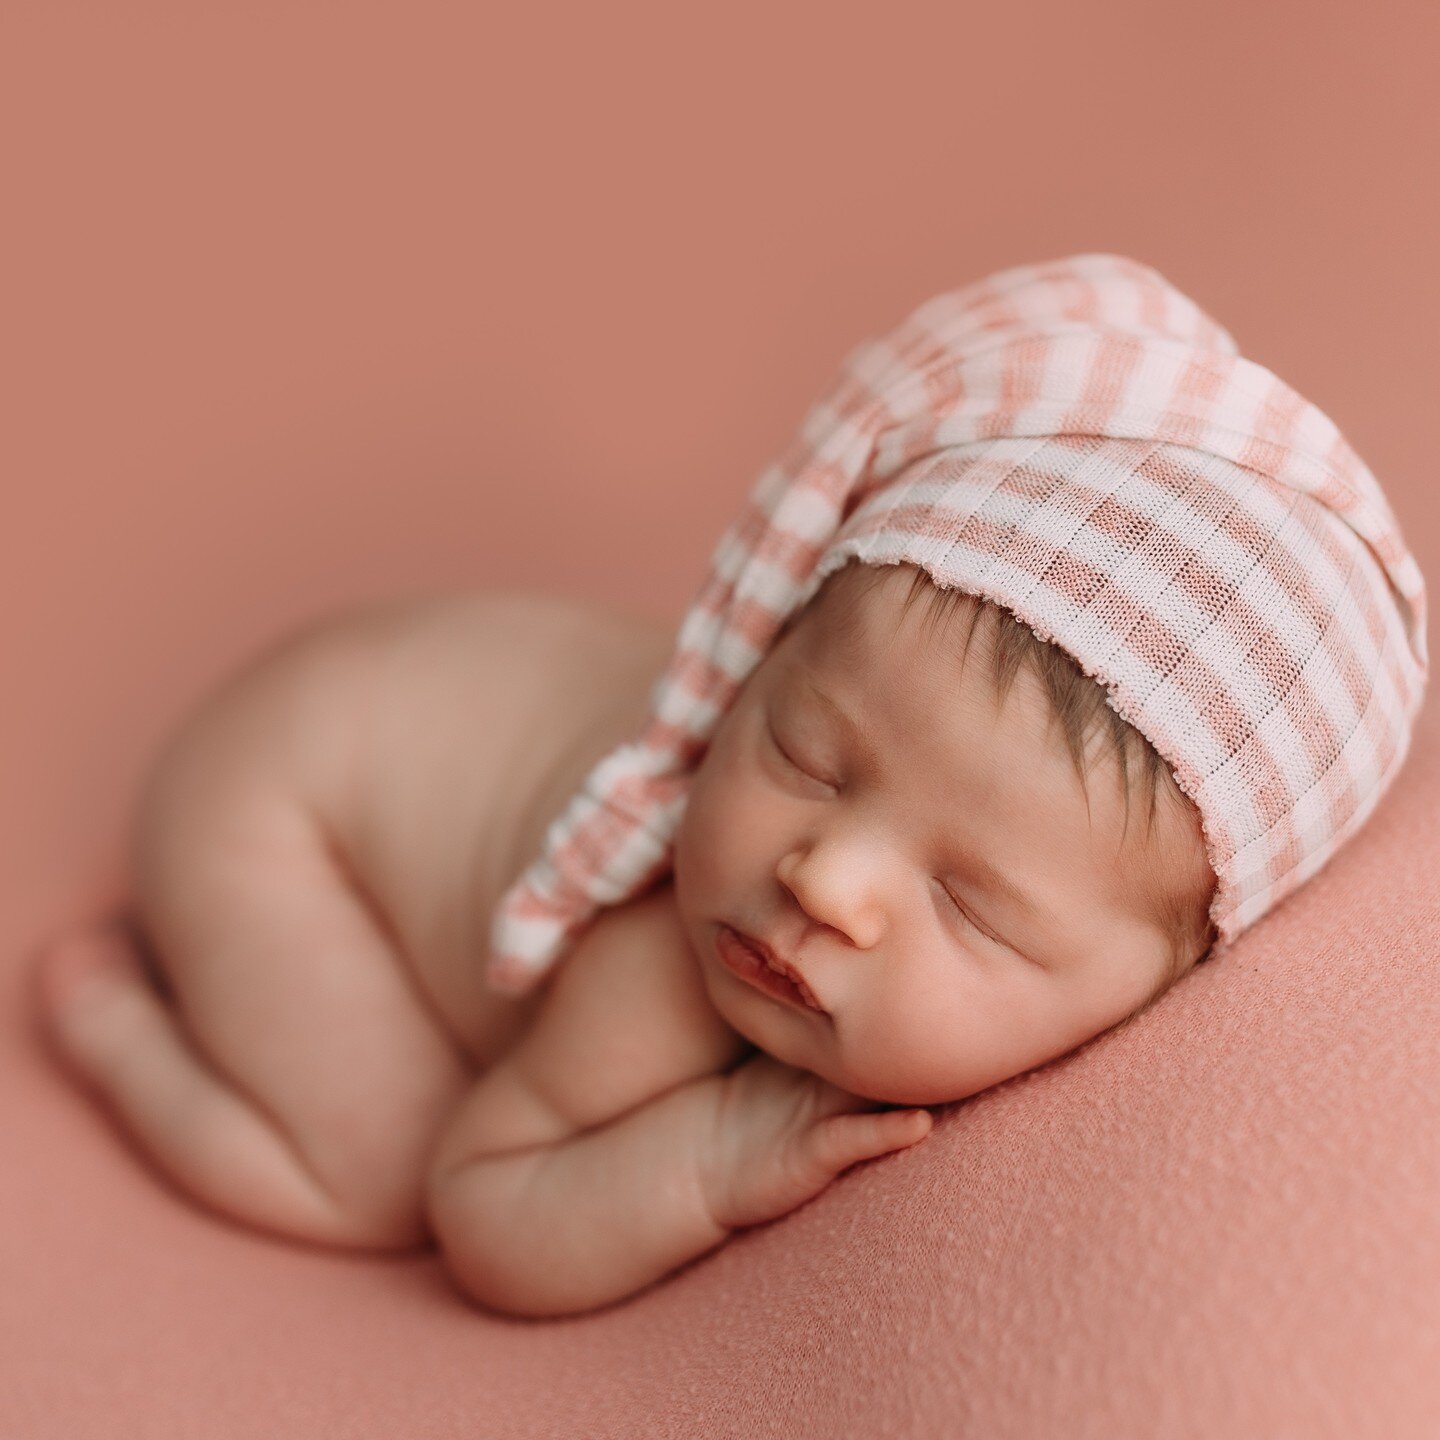 Squishy tushy. 
#NewbornPhotography #BabyPortraits #TinyMiracles #SweetBabies #NewbornLove #PreciousMoments #BabyPhotography #CutenessOverload #BabyBliss #InnocenceCaptured #LittleBundleOfJoy #CherishedMemories #NewbornSession #SleepingBeauty #Adorab